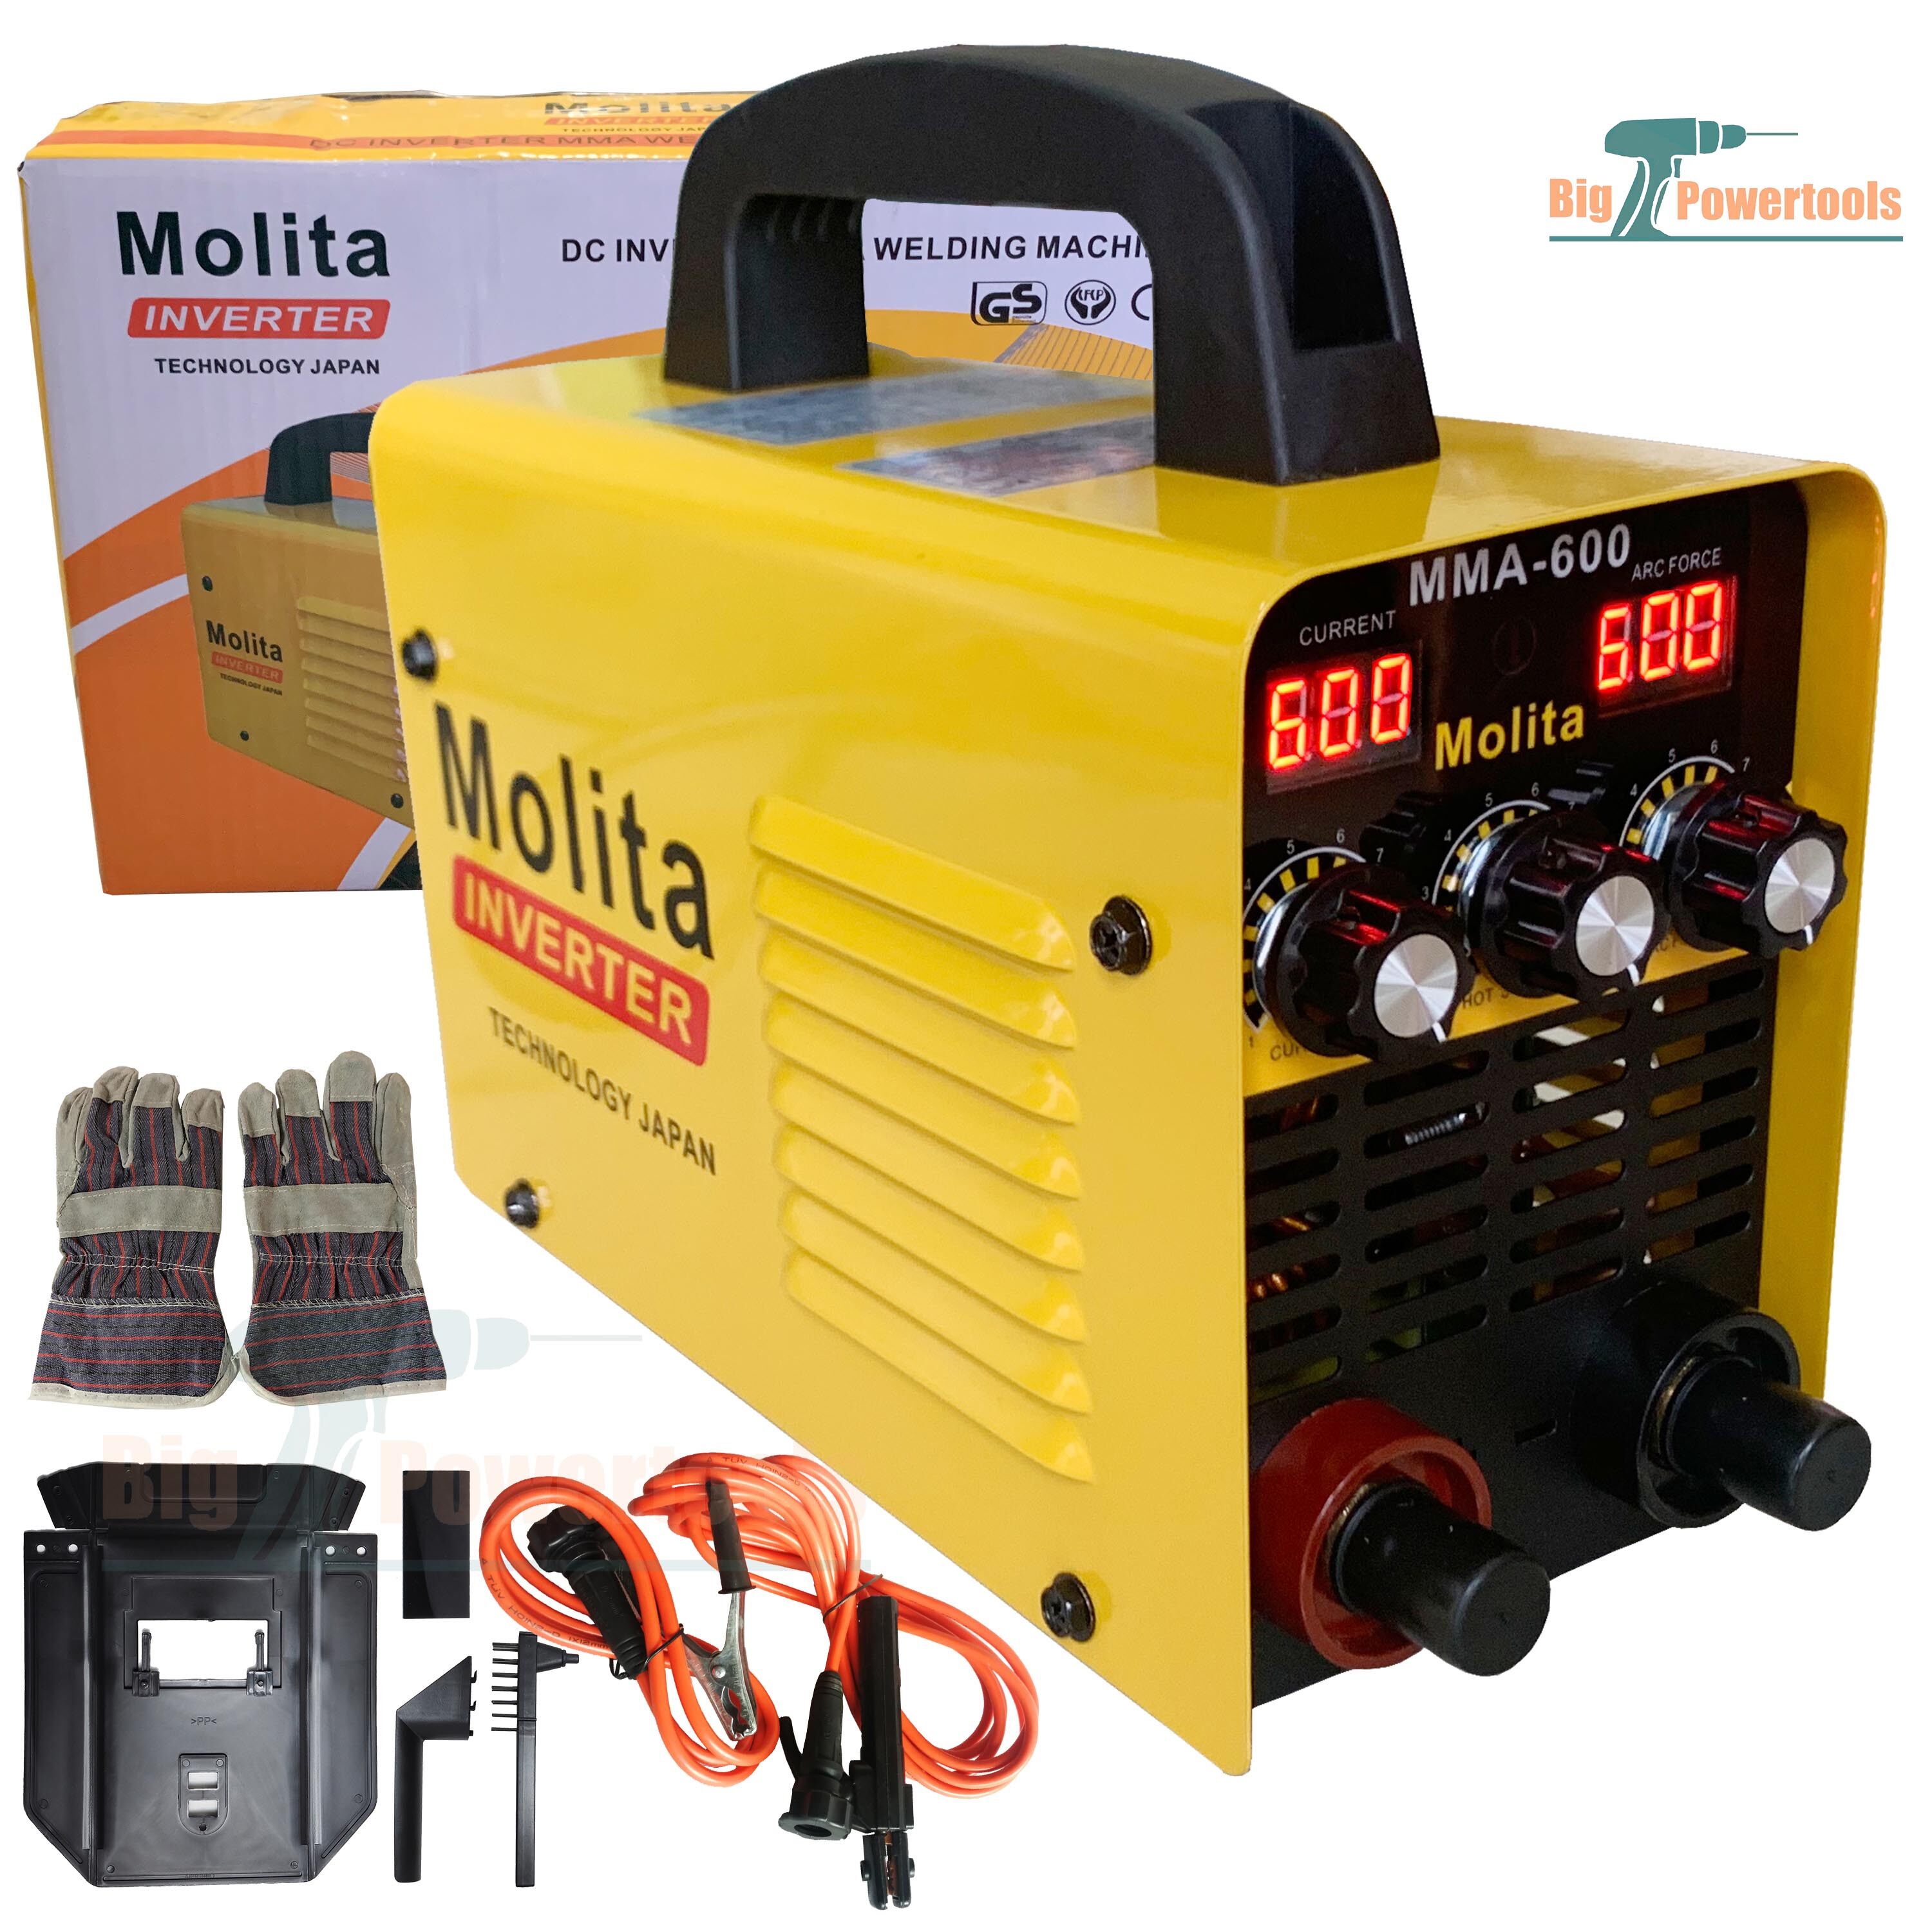 MOLITA ตู้เชื่อม Inverter รุ่นใหญ่ MMA-600 (รุ่นใหม่ล่าสุด2 จอ 3 ปุ่ม ）ตู้เชื่อมไฟฟ้า รุ่นสีเหลือง